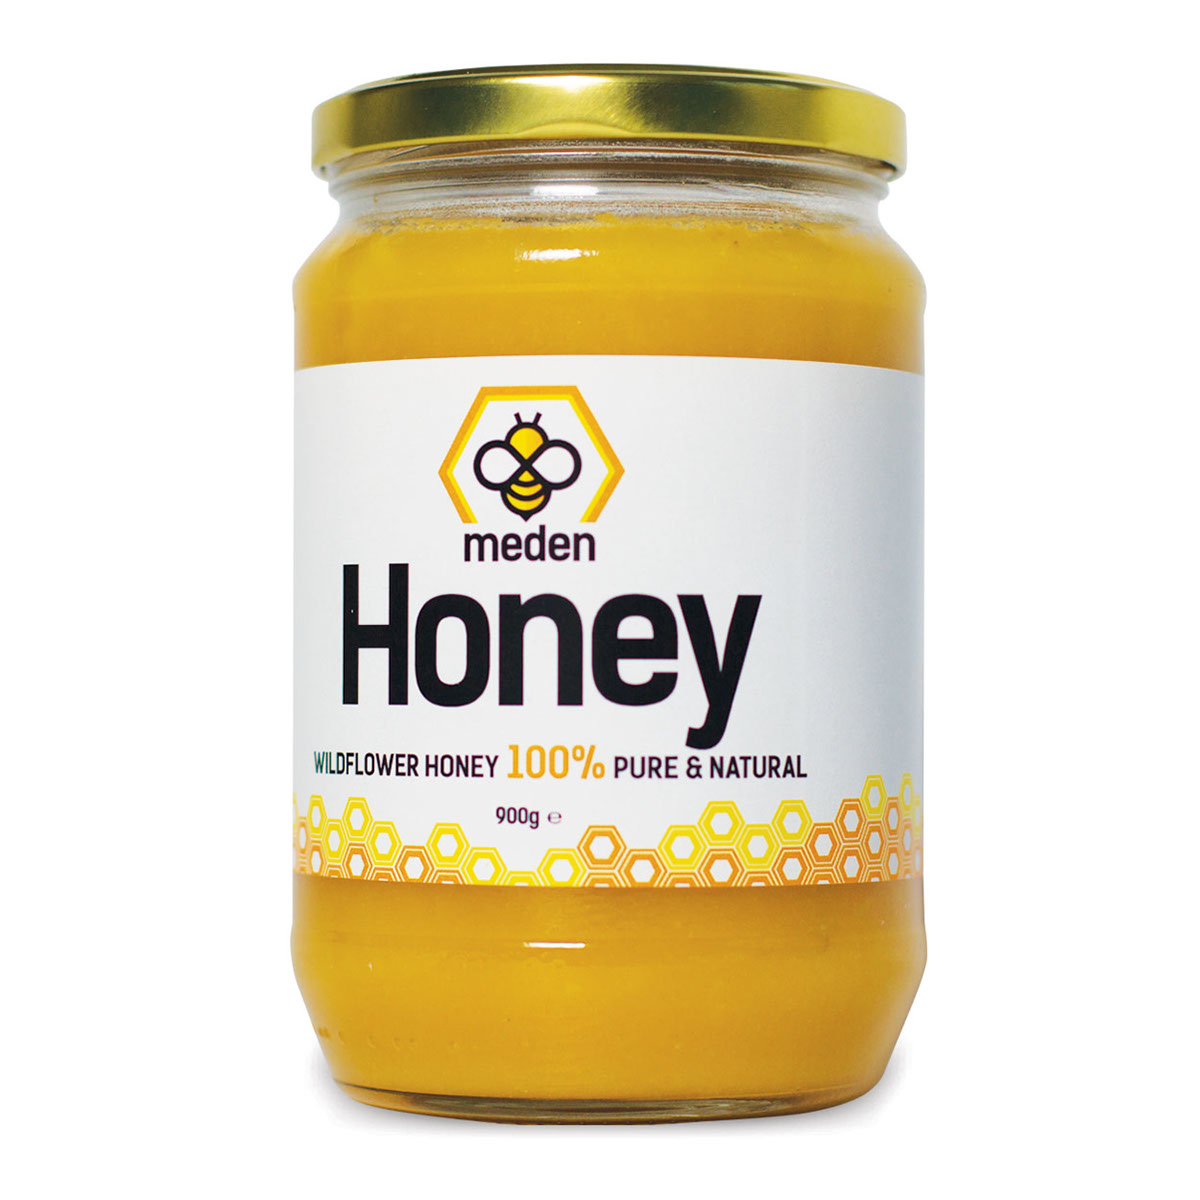 honey label Honey jar honey branding Bee products labels honey products branding